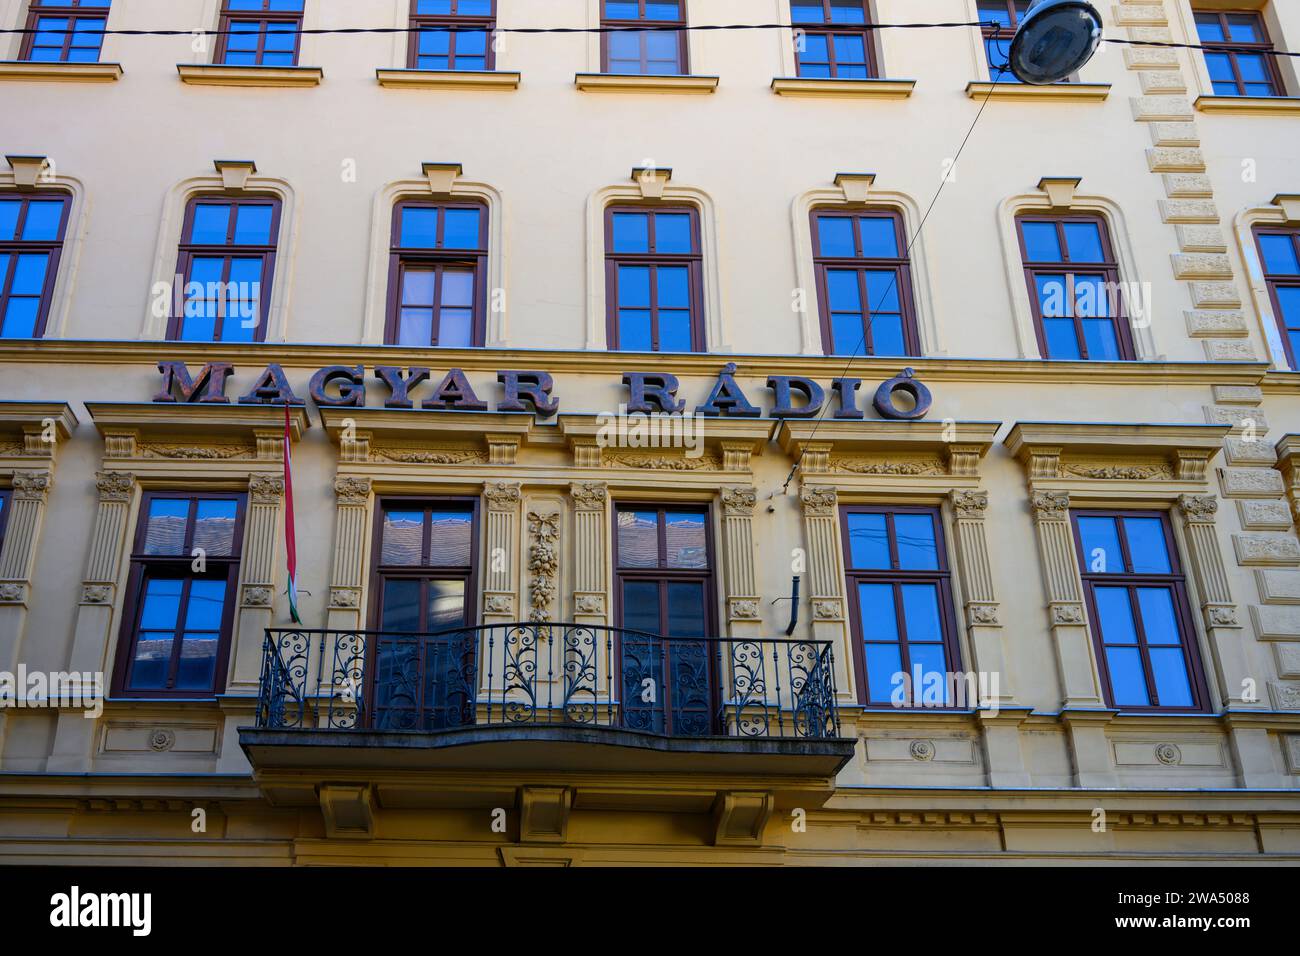 Magyar Rádió building - birthplace of the bloody 1956 Hungarian Revolution - Sándor Bródy Street Budapest, Hungary Stock Photo